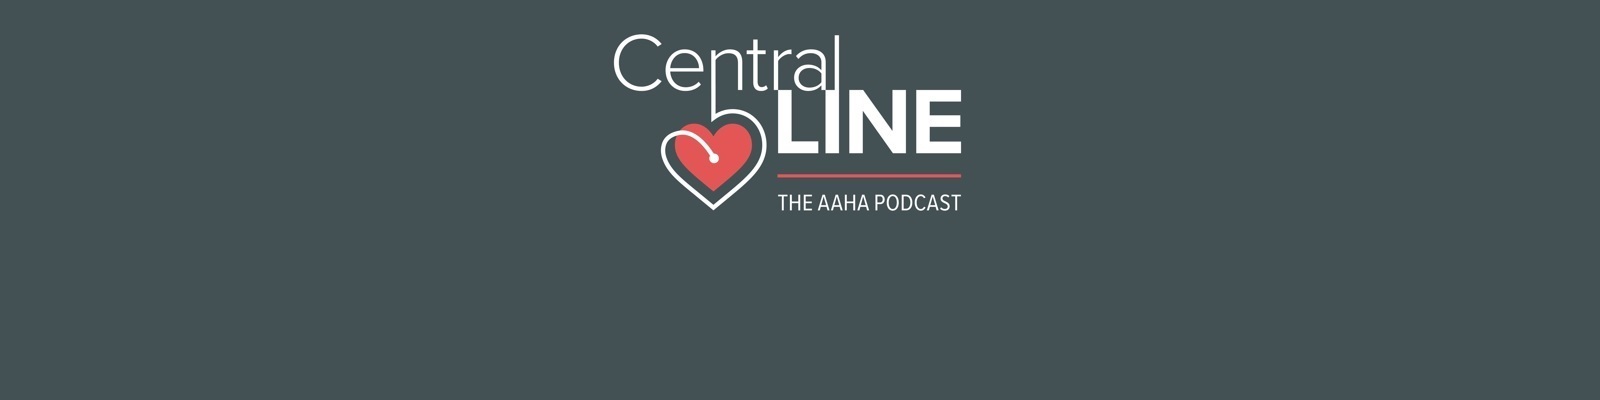 Central Line: The AAHA Podcast